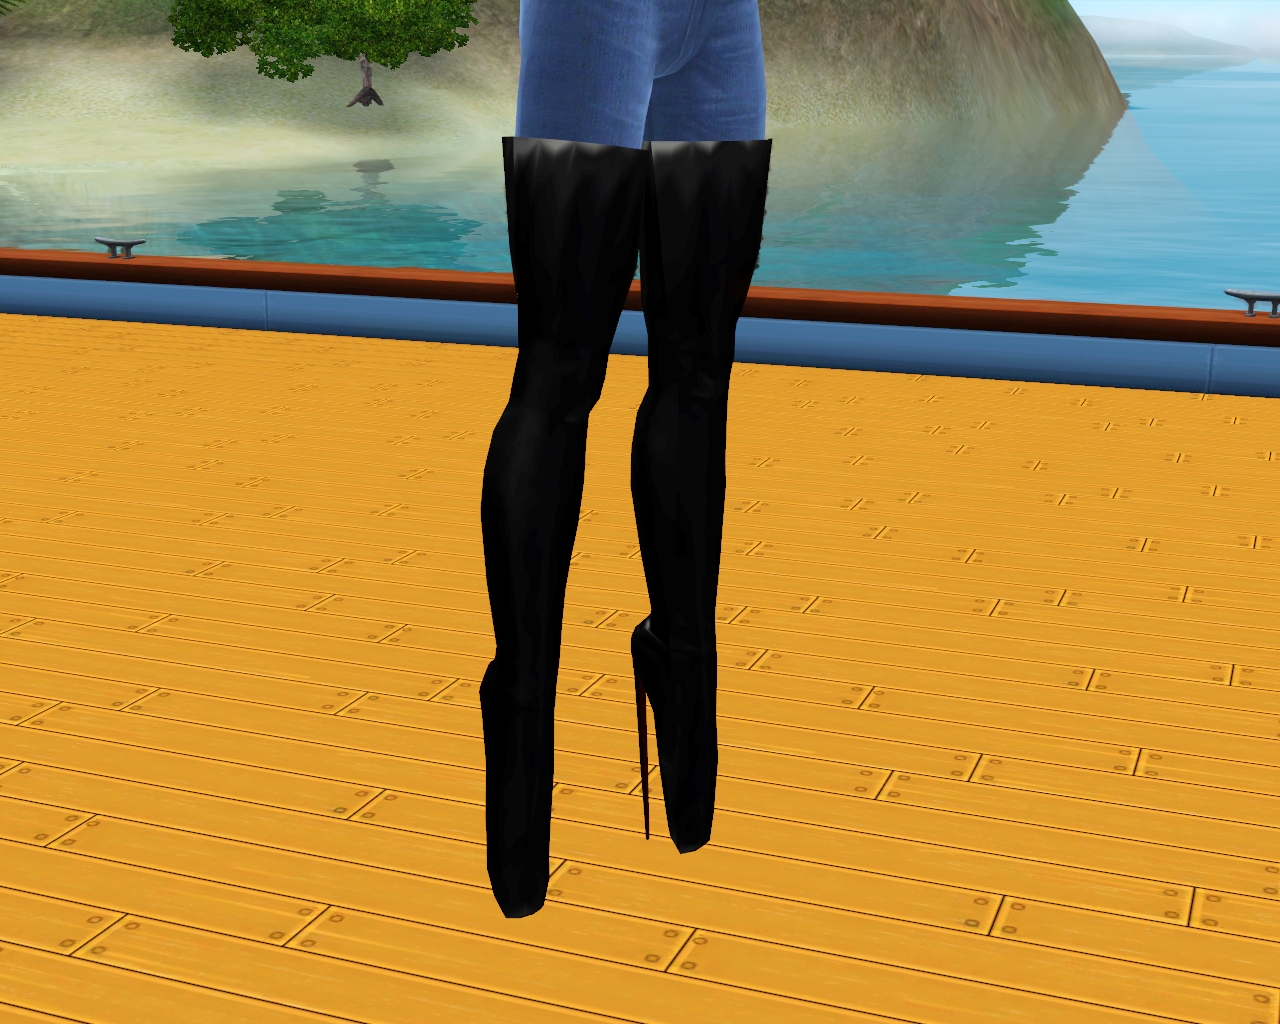 Sims 4 Ballerina Mod